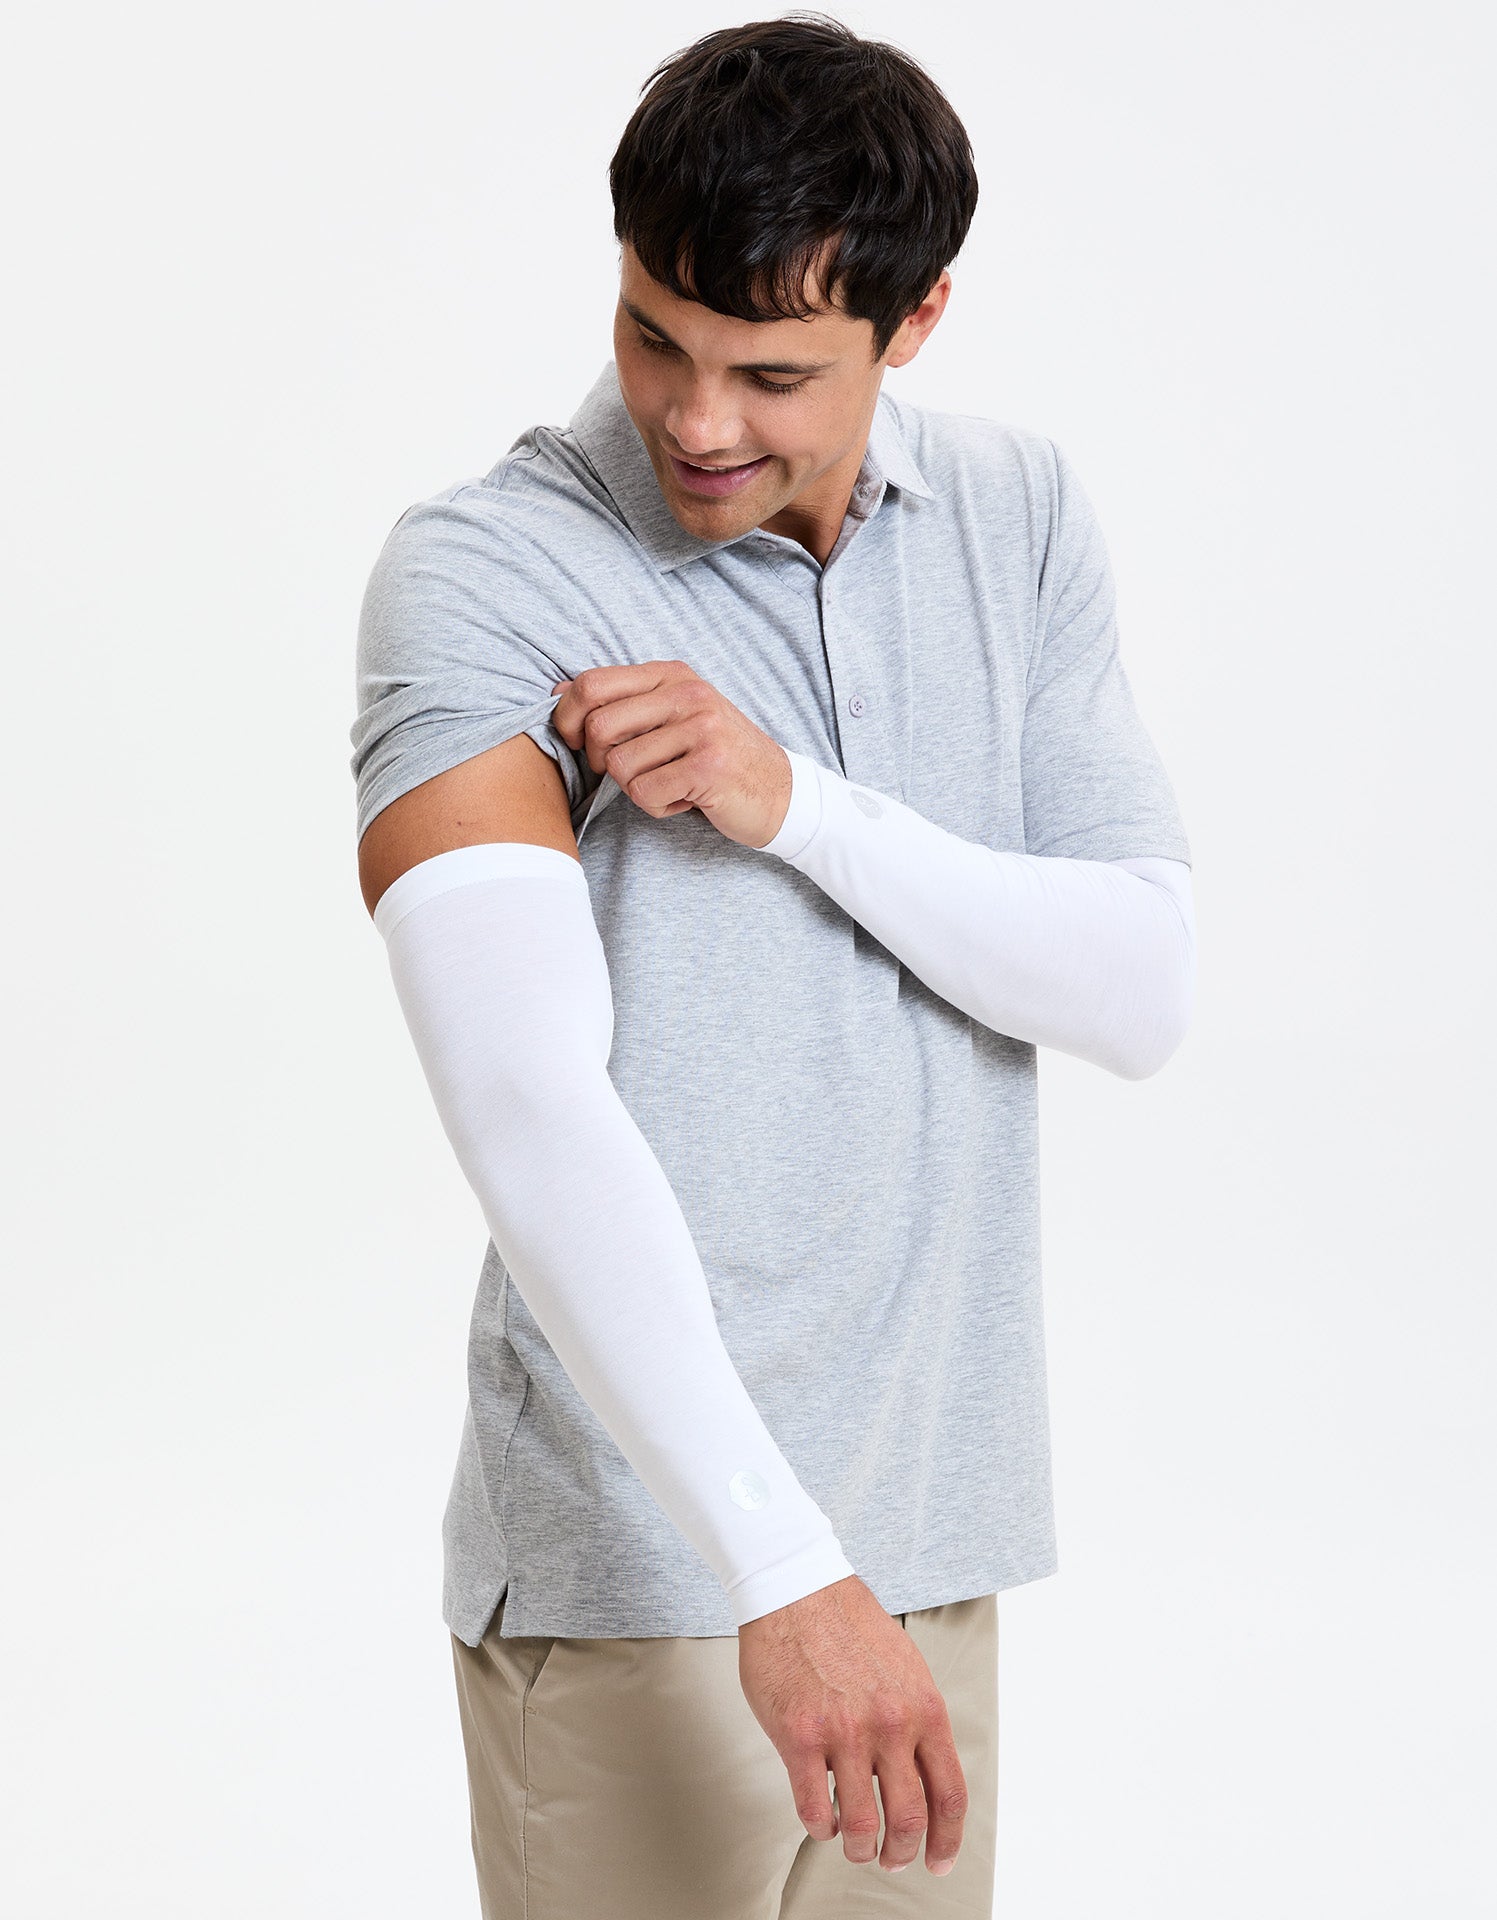 Arm Sleeves UPF50+ Sensitive Collection - S / White / No Thumbholes